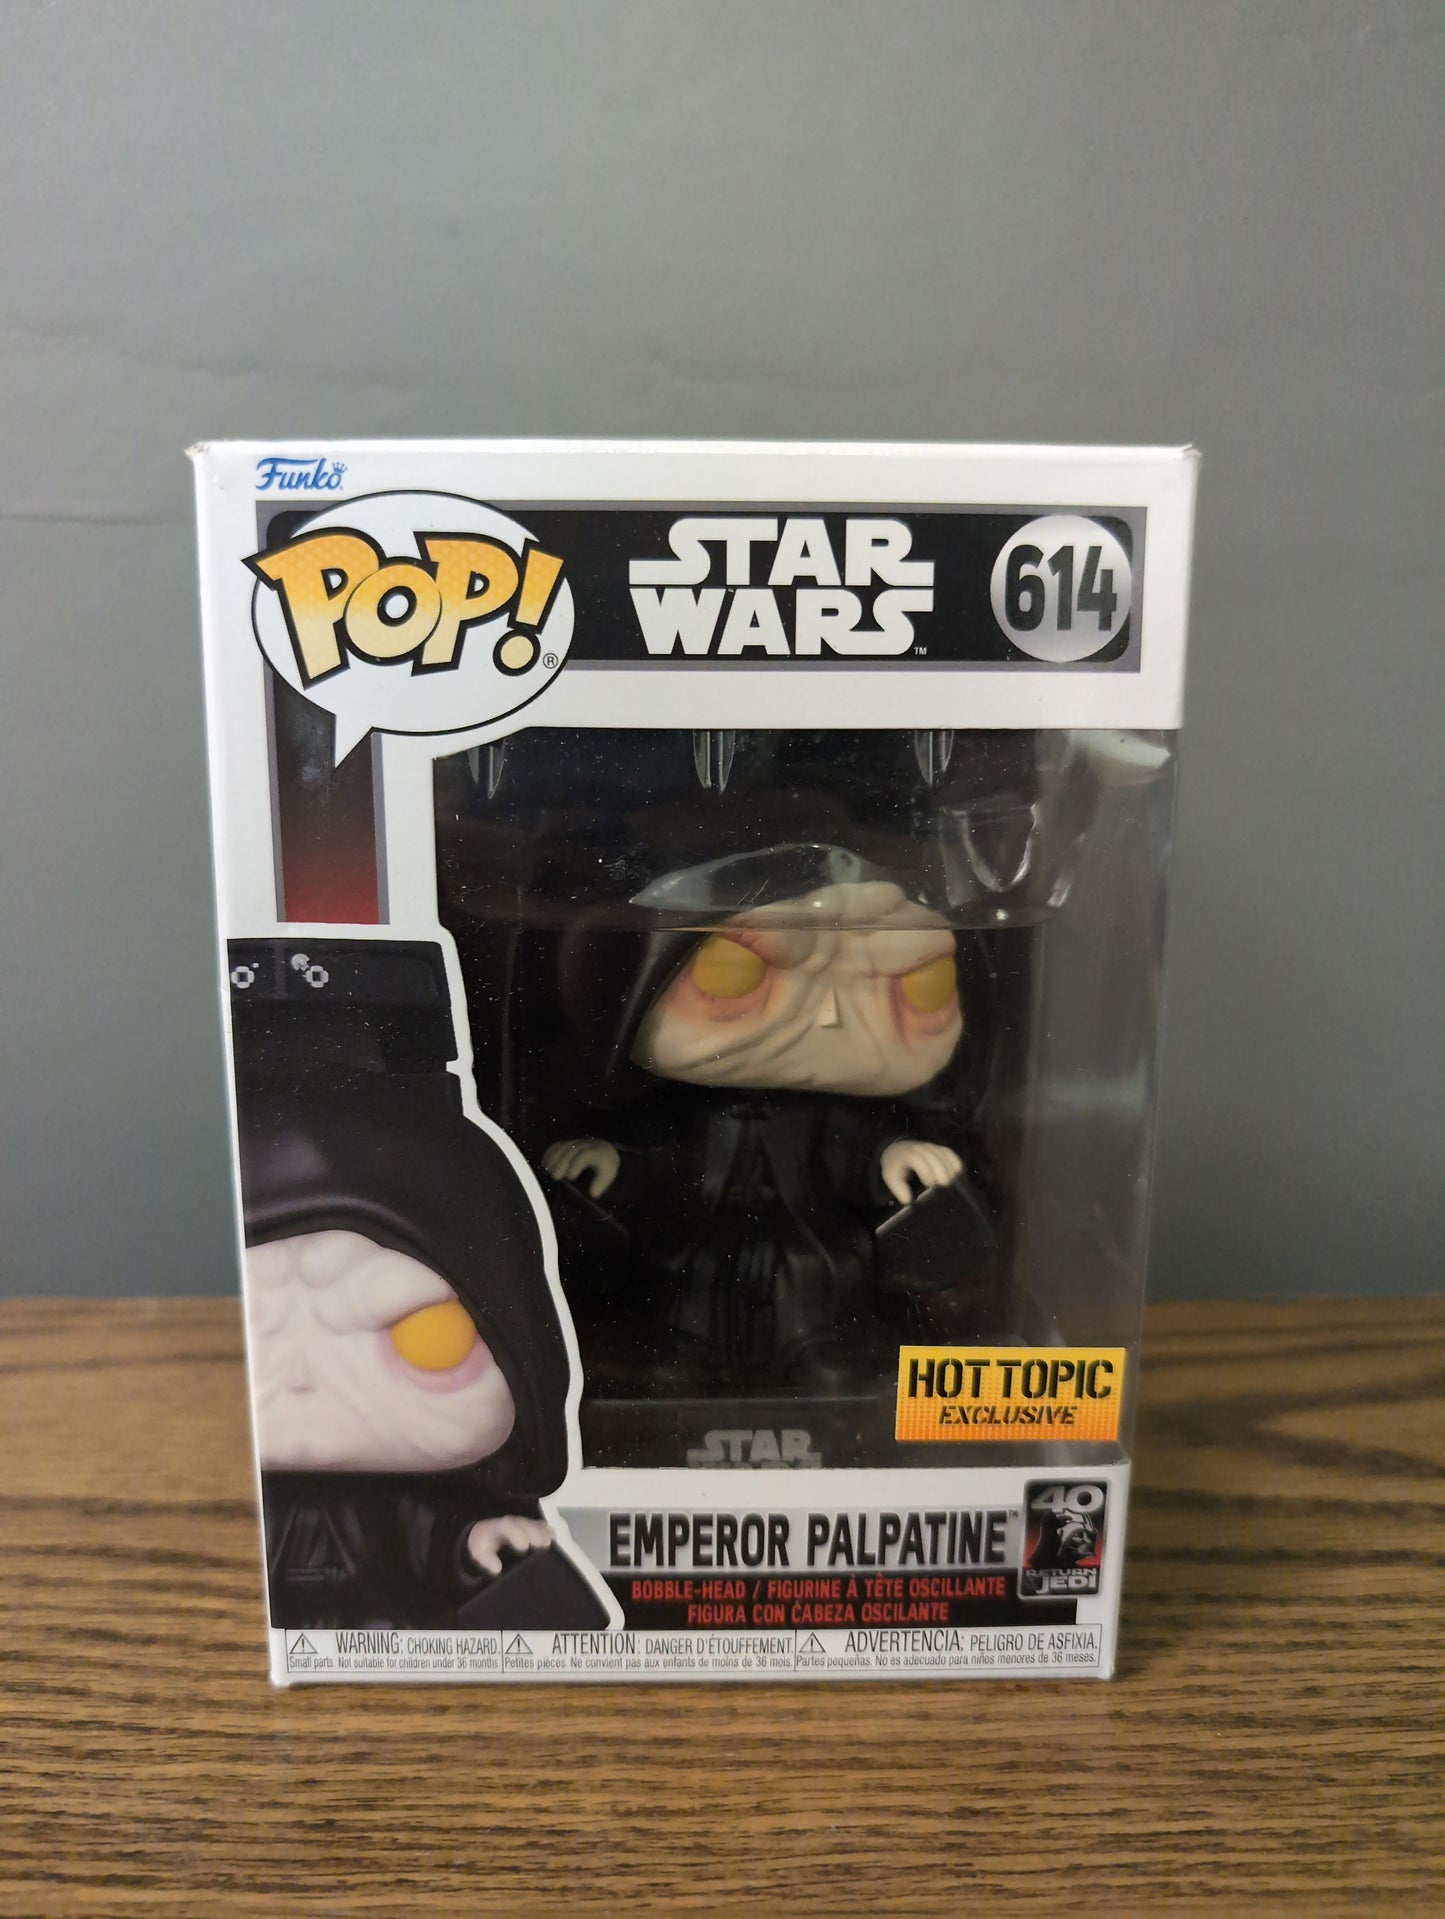 Funko POP! Star Wars 614 Emperor Palpatine HT Exclusive